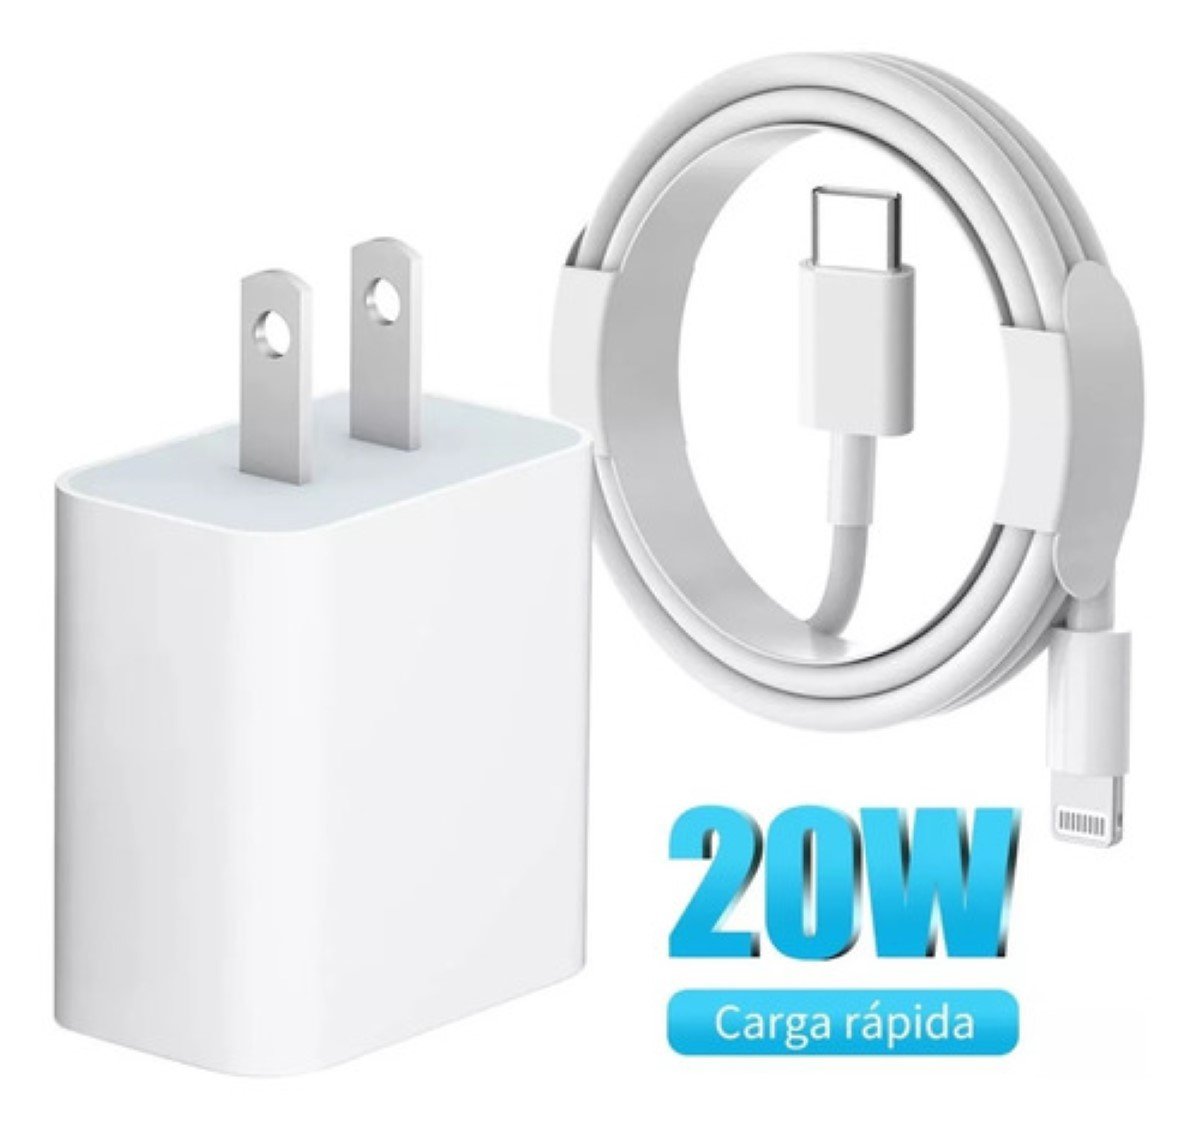 20W 4-Pack Cargador iPhone Carga Rapida con 2M Cable para iPhone